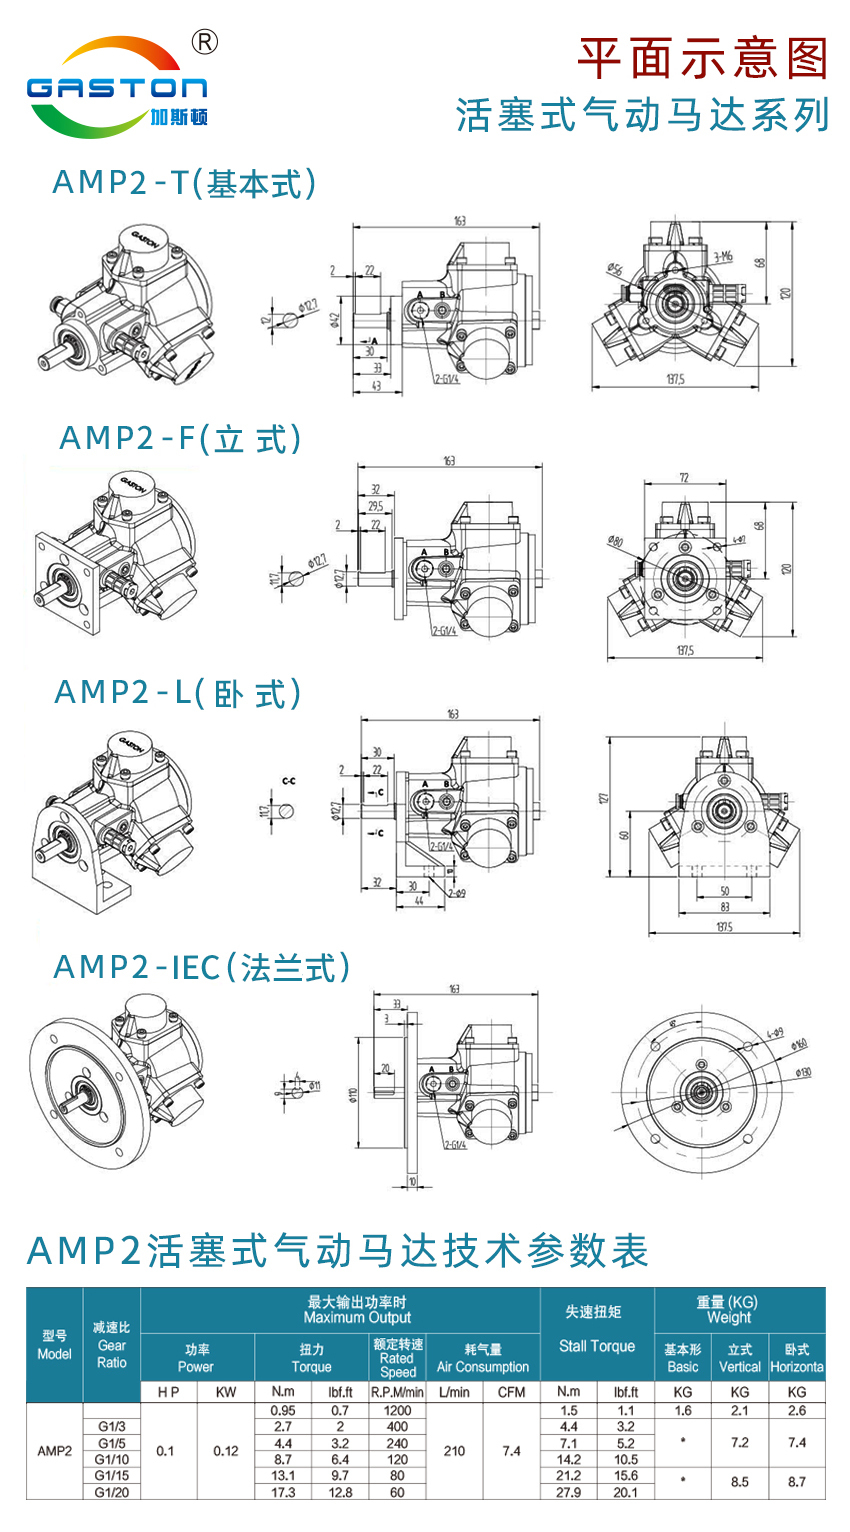 AMP2-IEC_14.jpg